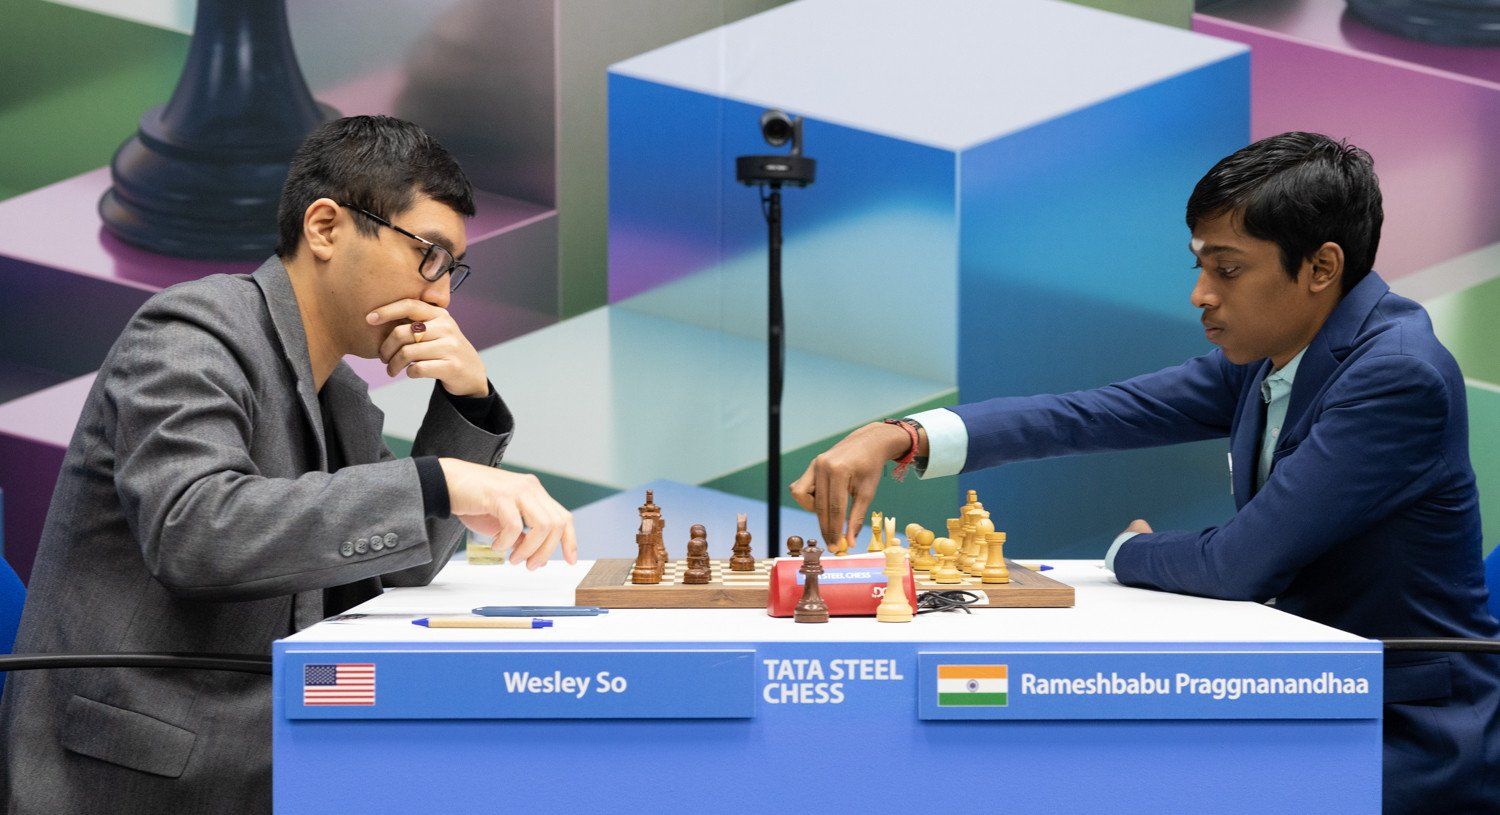 Giri Wins On Demand To Take Tata Steel Chess Masters 2023 